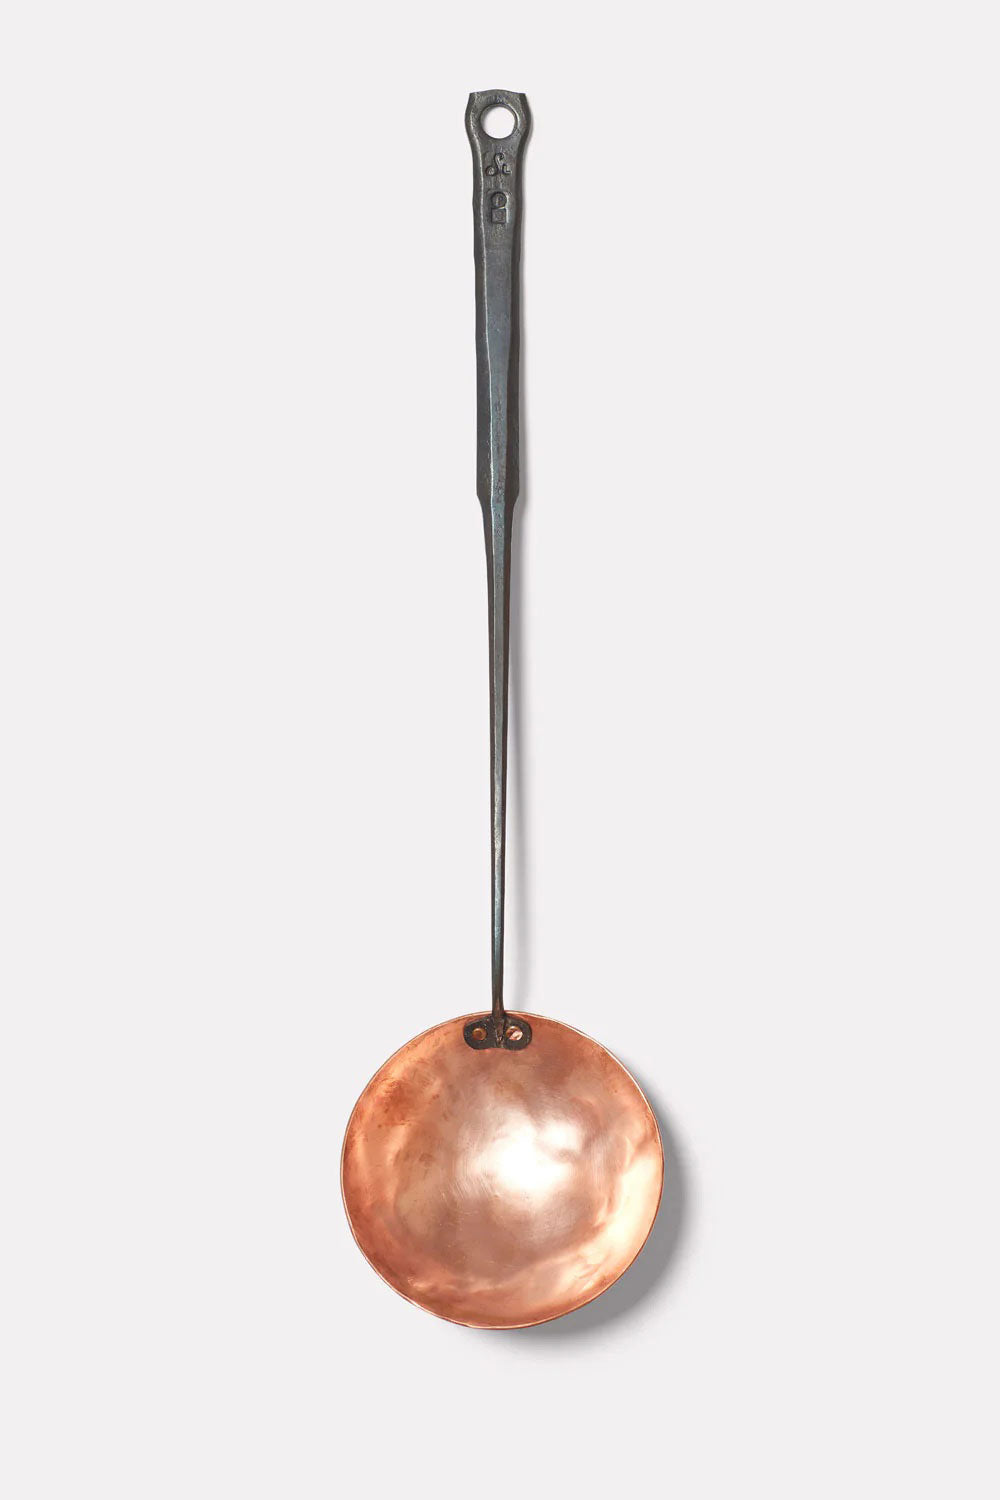 Original Copper Egg Spoon